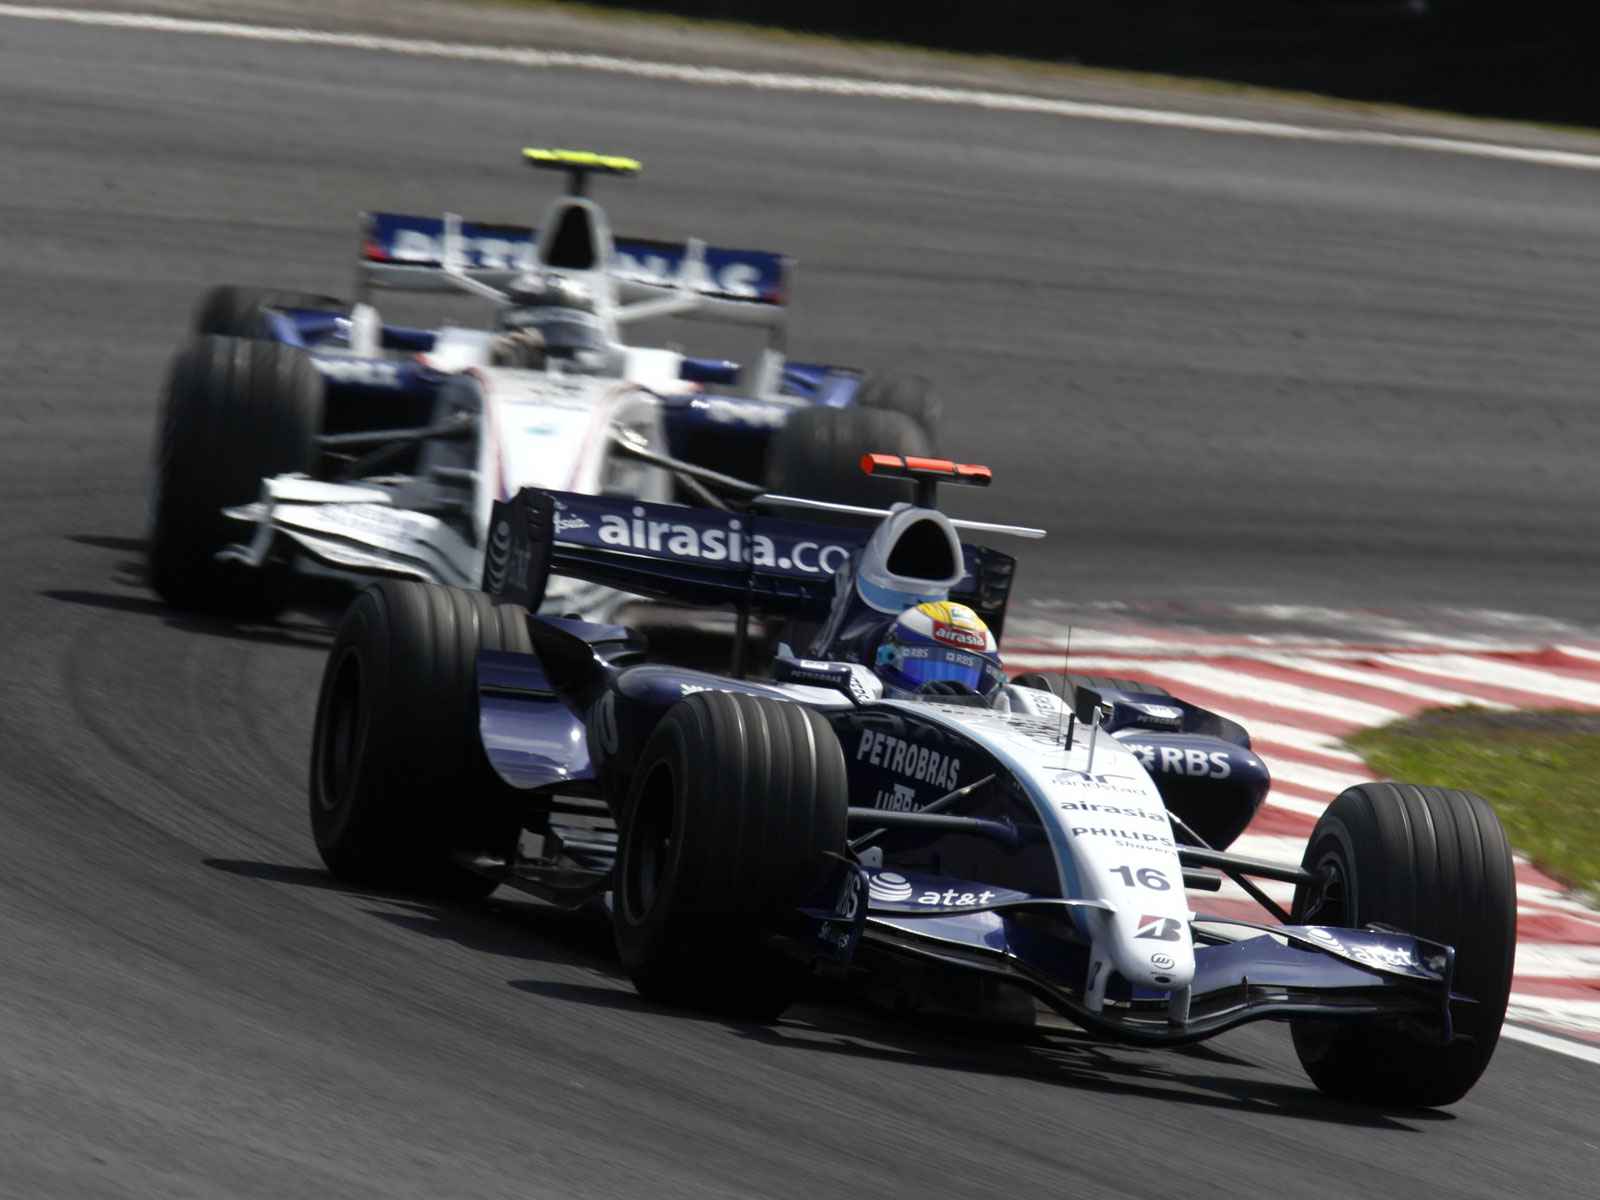 HD Wallpapers 2007 Formula 1 Grand Prix of Brazil | F1-